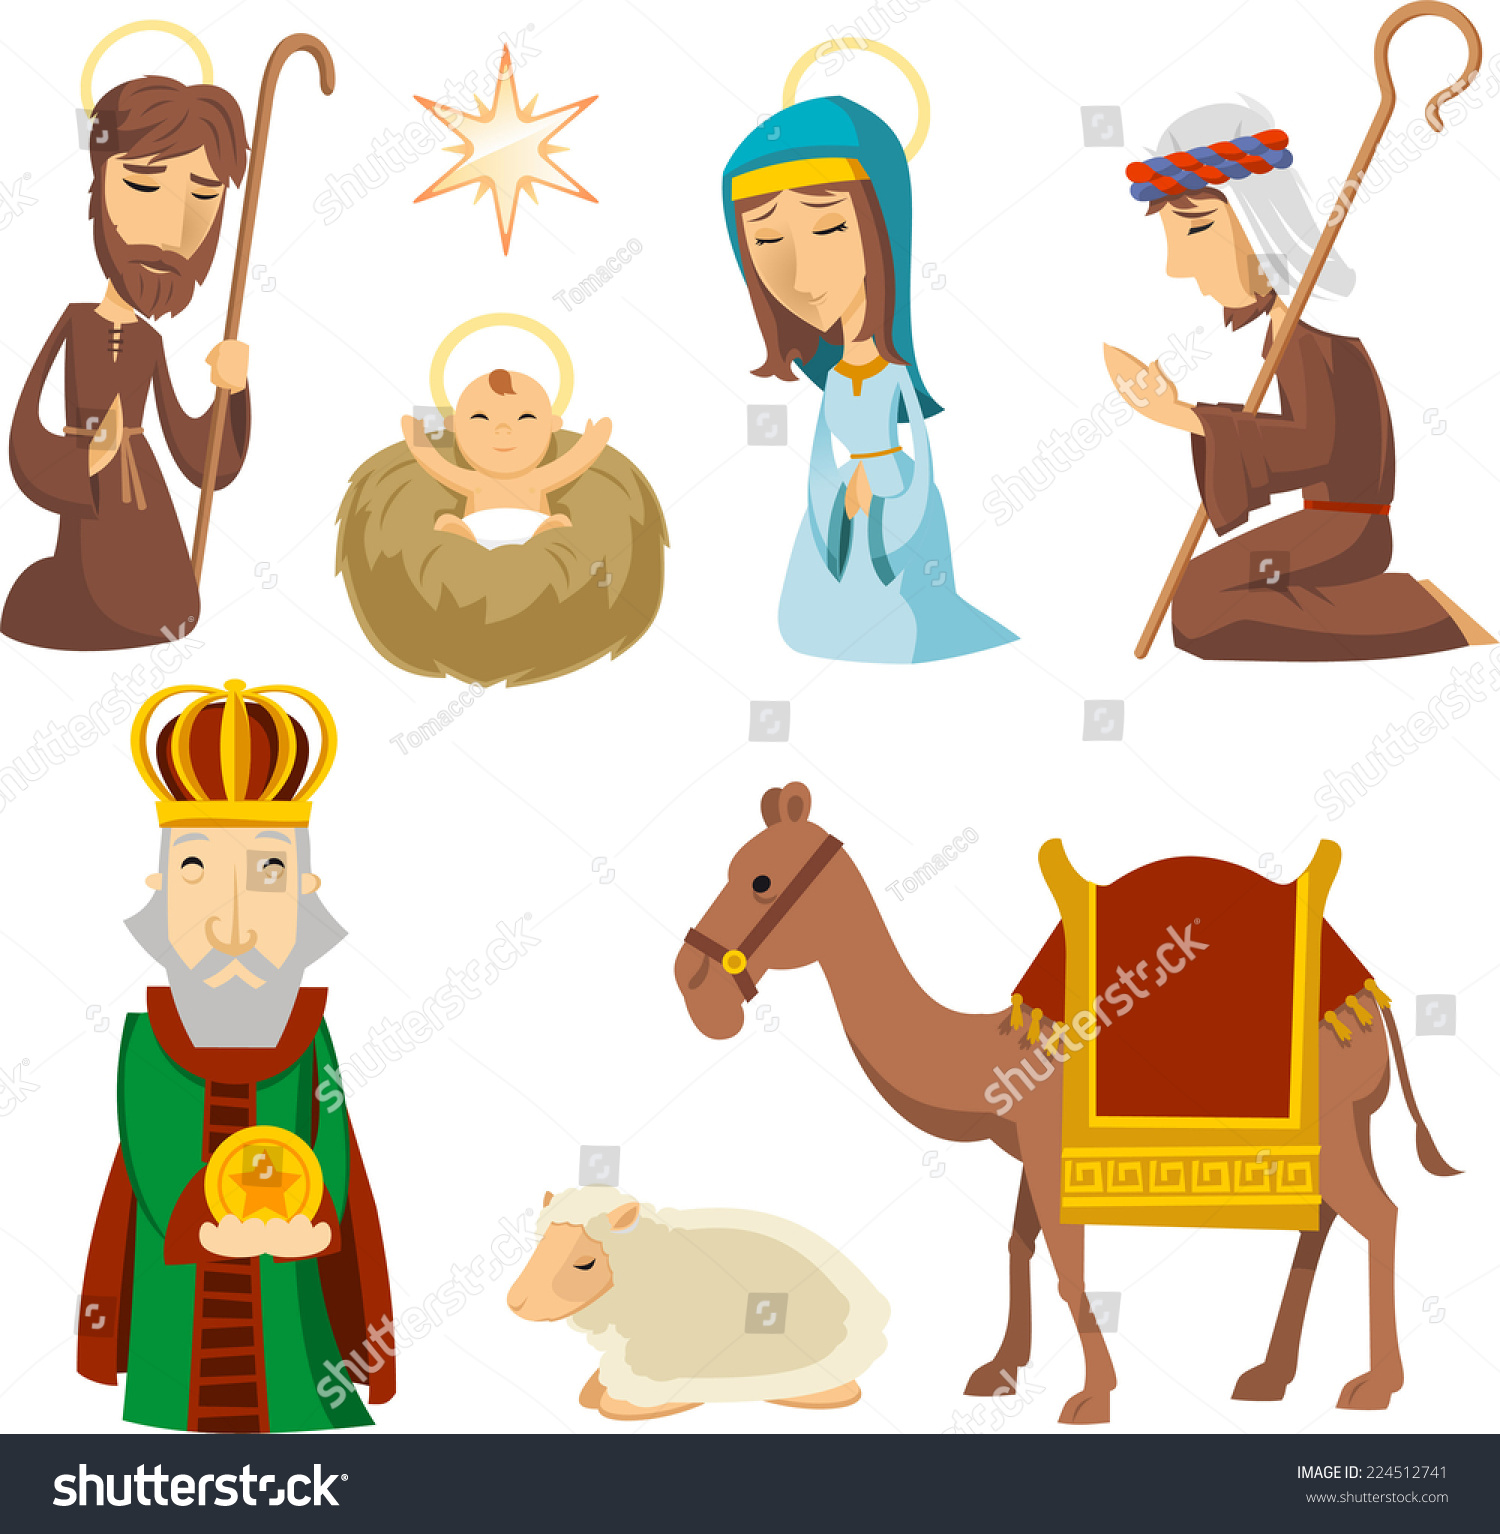 Nativity scene characters illustrations